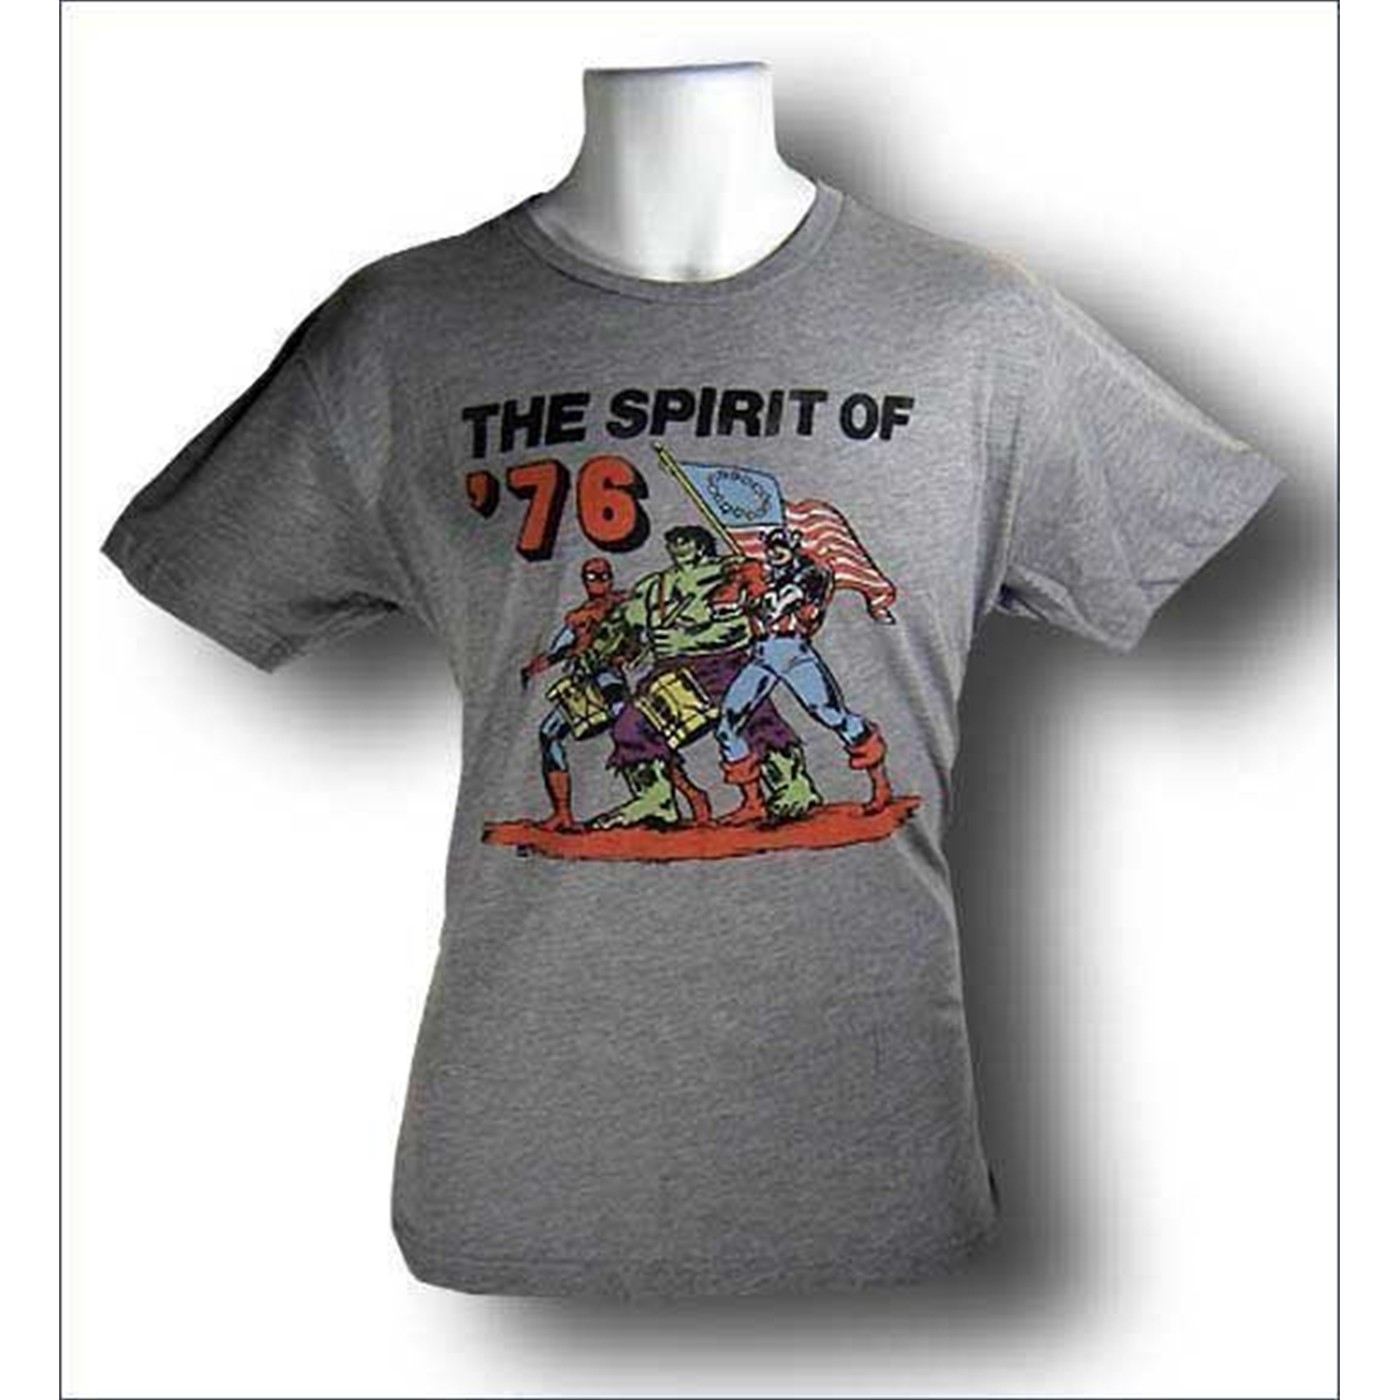 Spirit of '76 T-Shirt by Junk Food